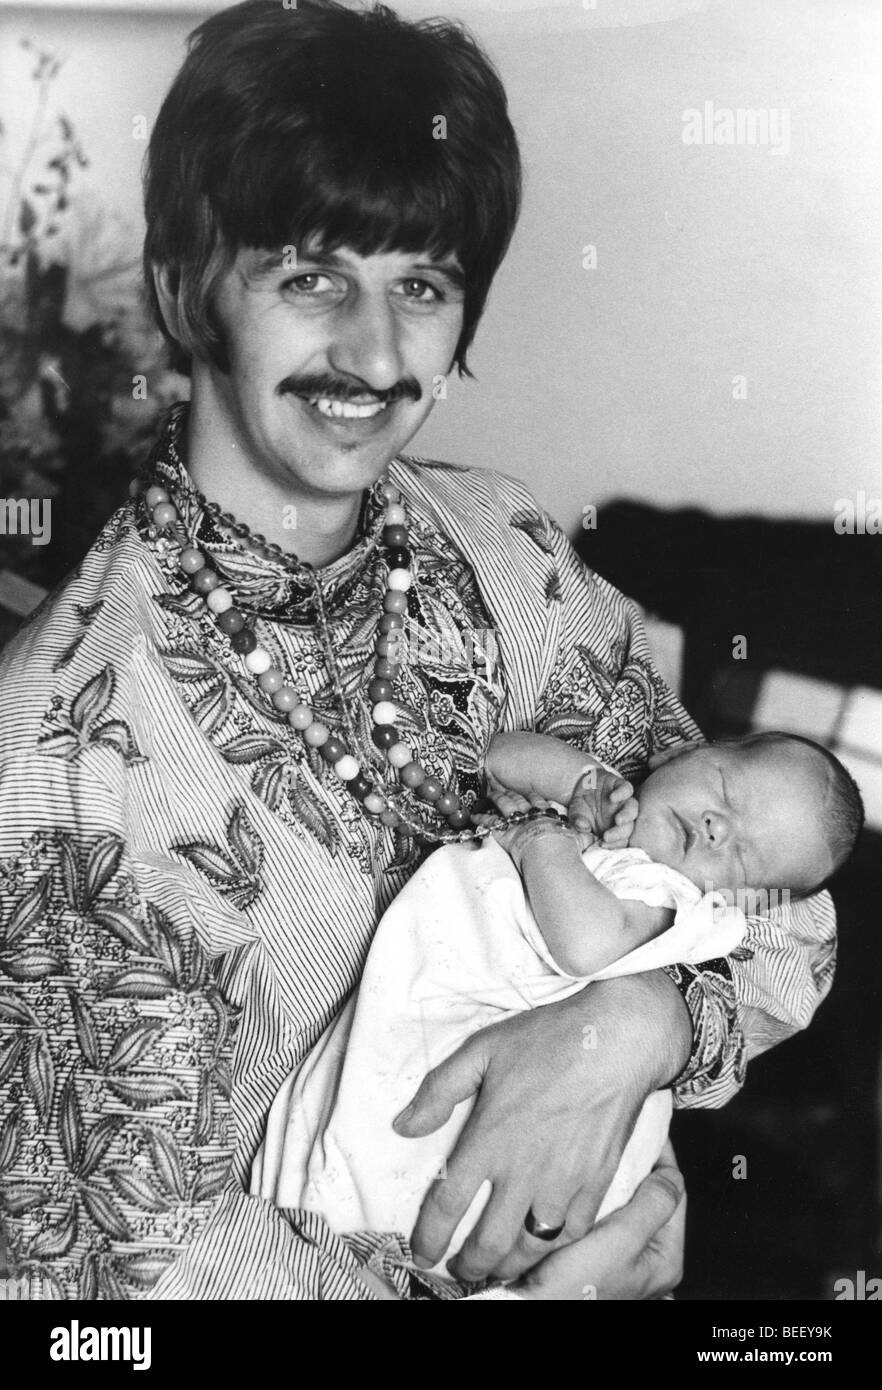 Beatle Ringo Starr holding his newborn son at the hospital Stock Photo